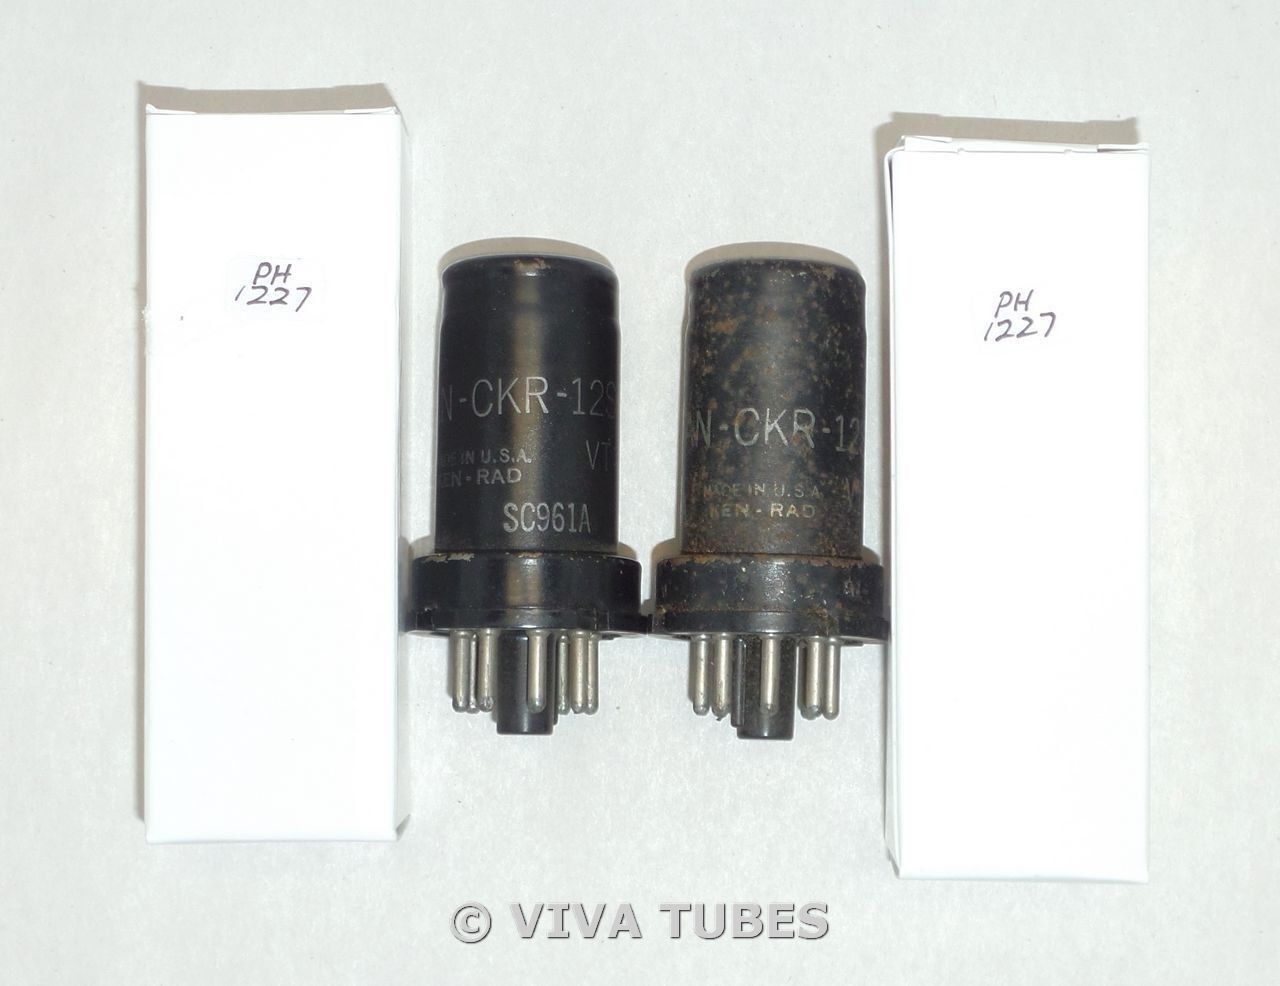 NOS Date Matched Pair Ken-Rad US JAN-CKR-12SK7 VT-131 Metal Vacuum Tubes |  eBay